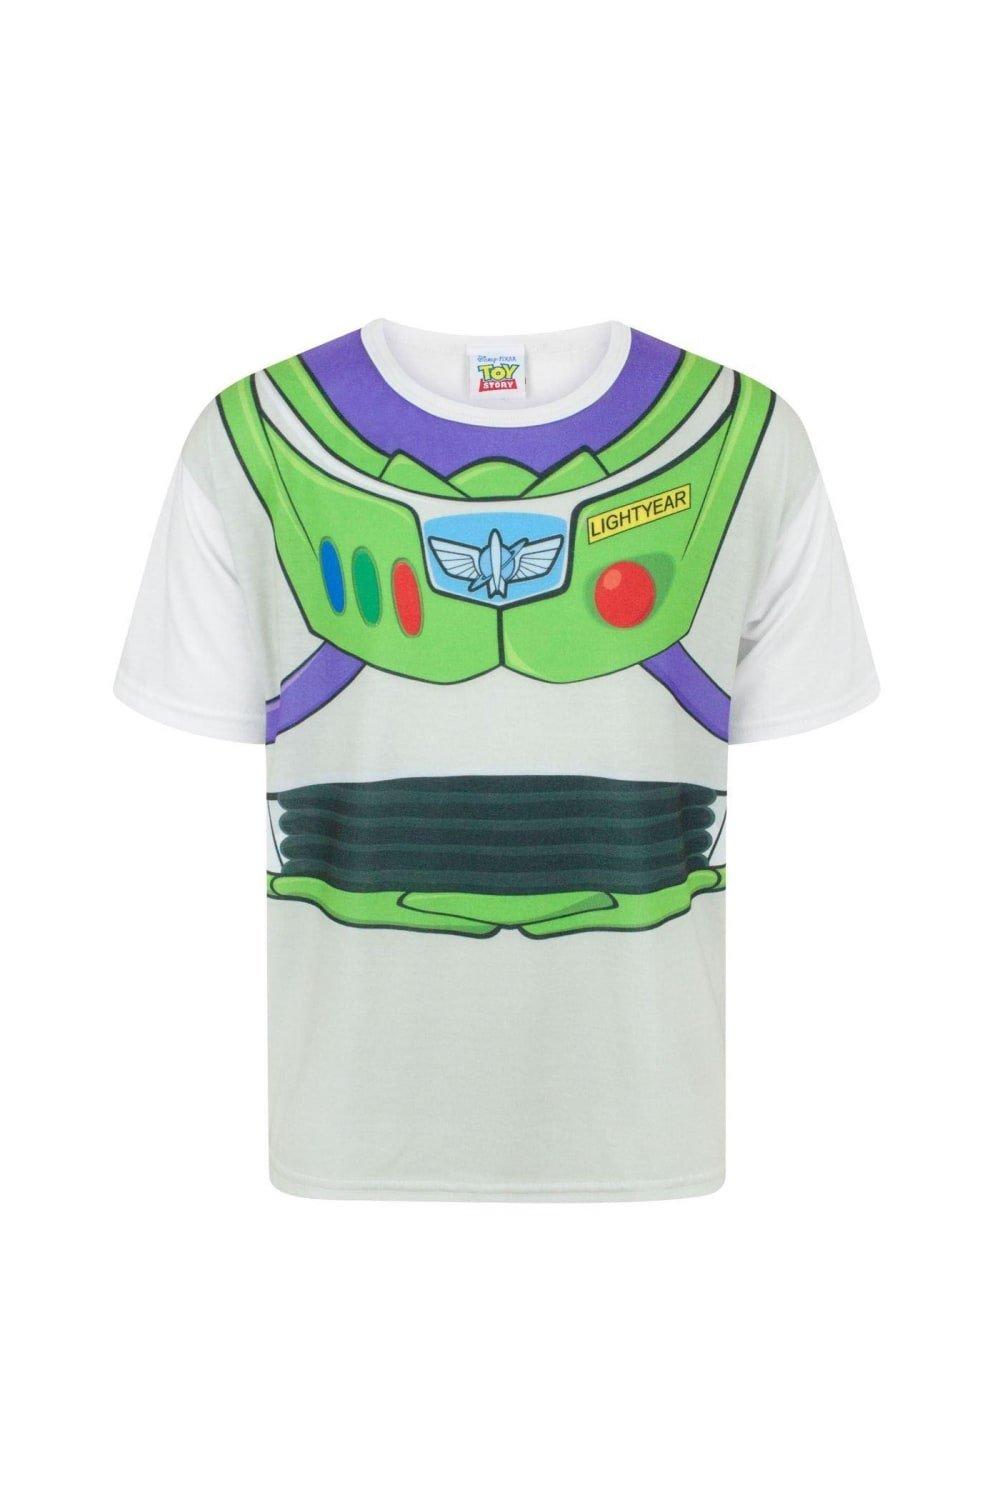 Disney Buzz Lightyear Costume T-Shirt